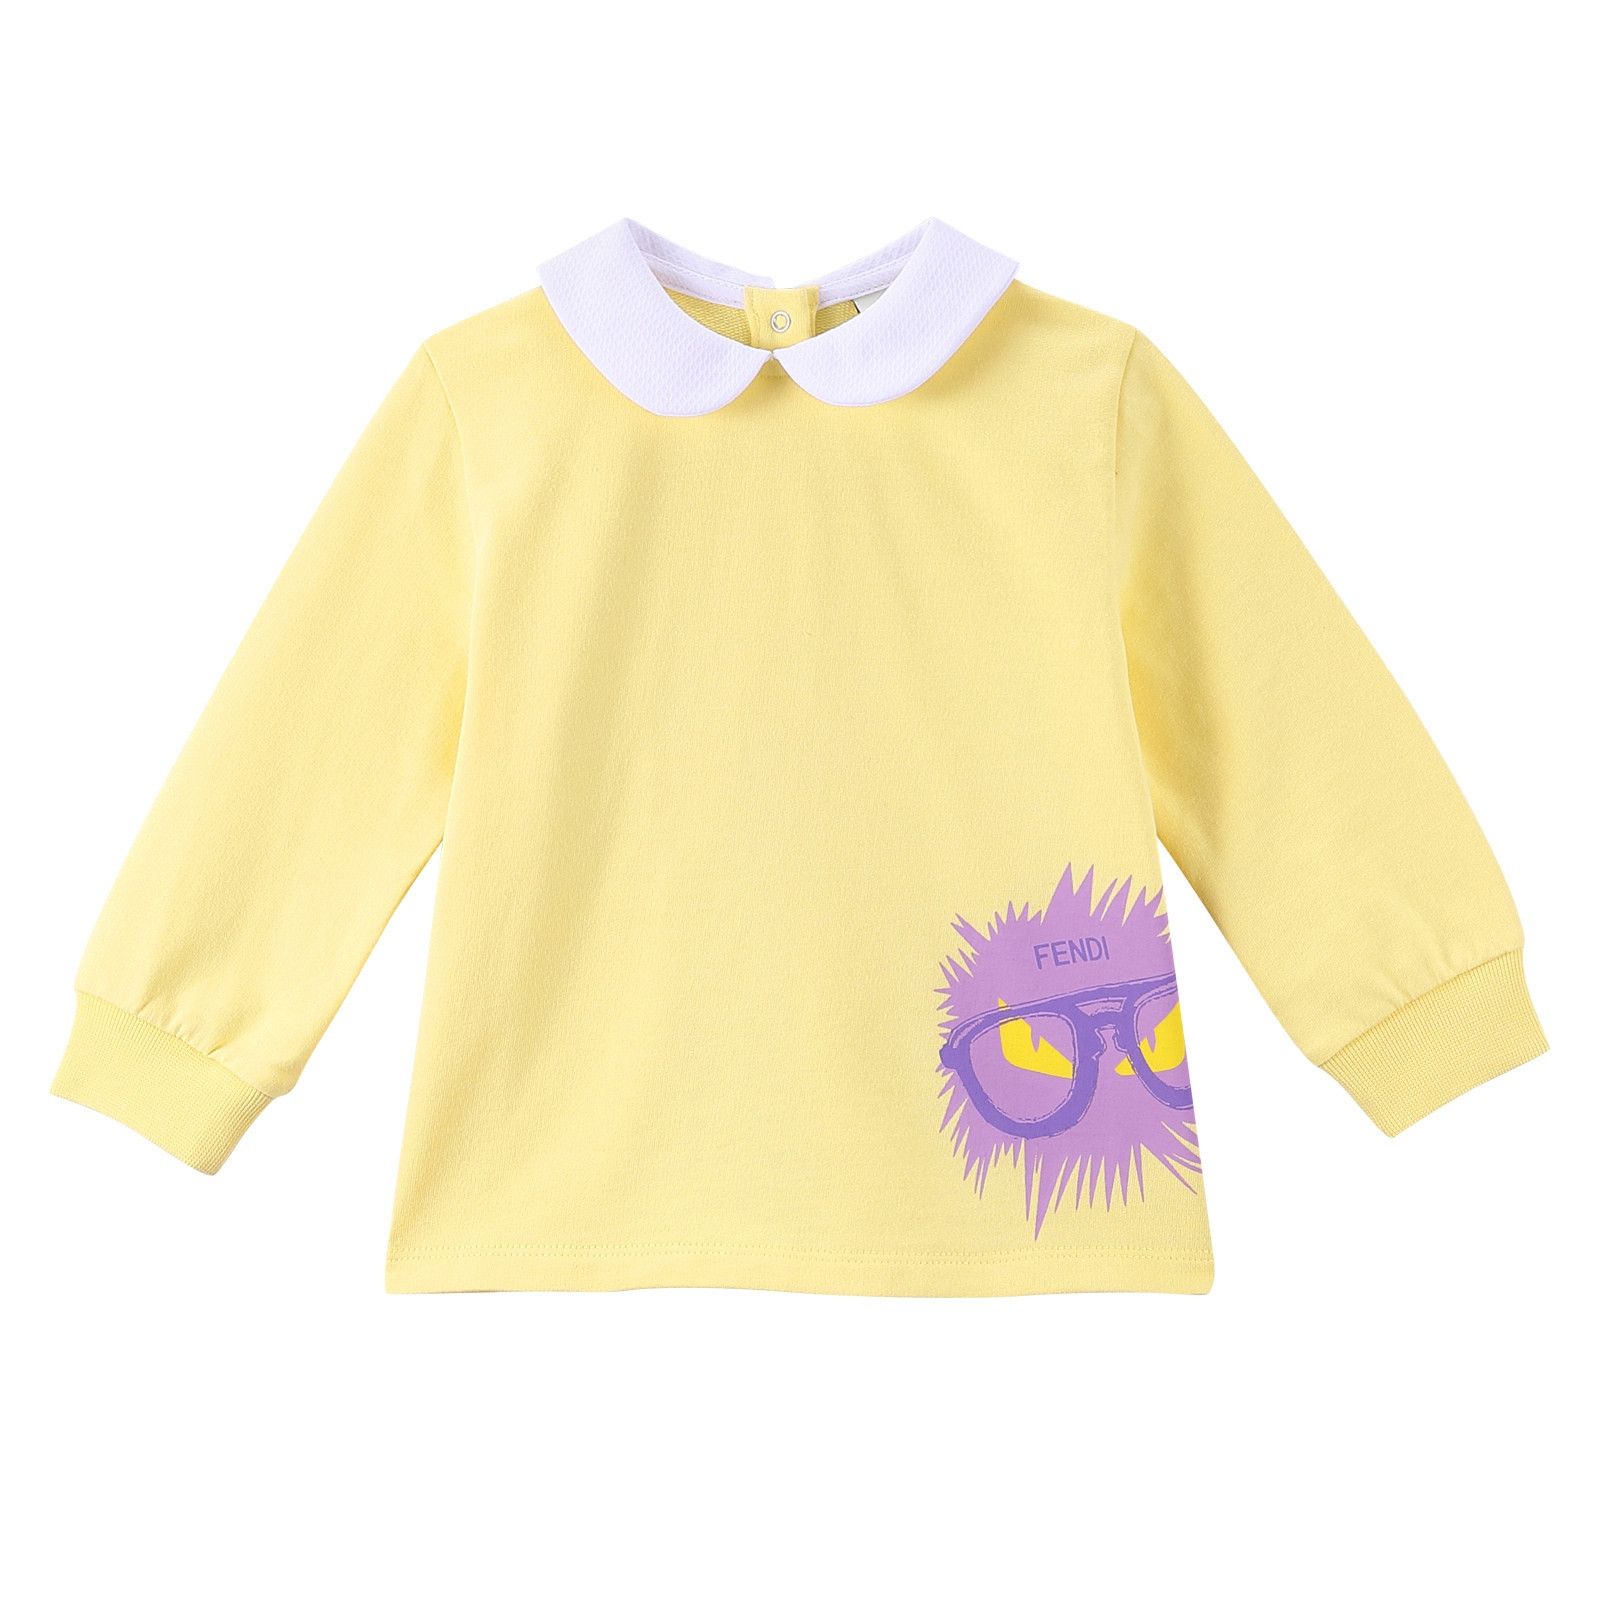 Baby Girls Light Yellow 'Monster' Printed Sweatshirt With Peter Pan Collar - CÉMAROSE | Children's Fashion Store - 1